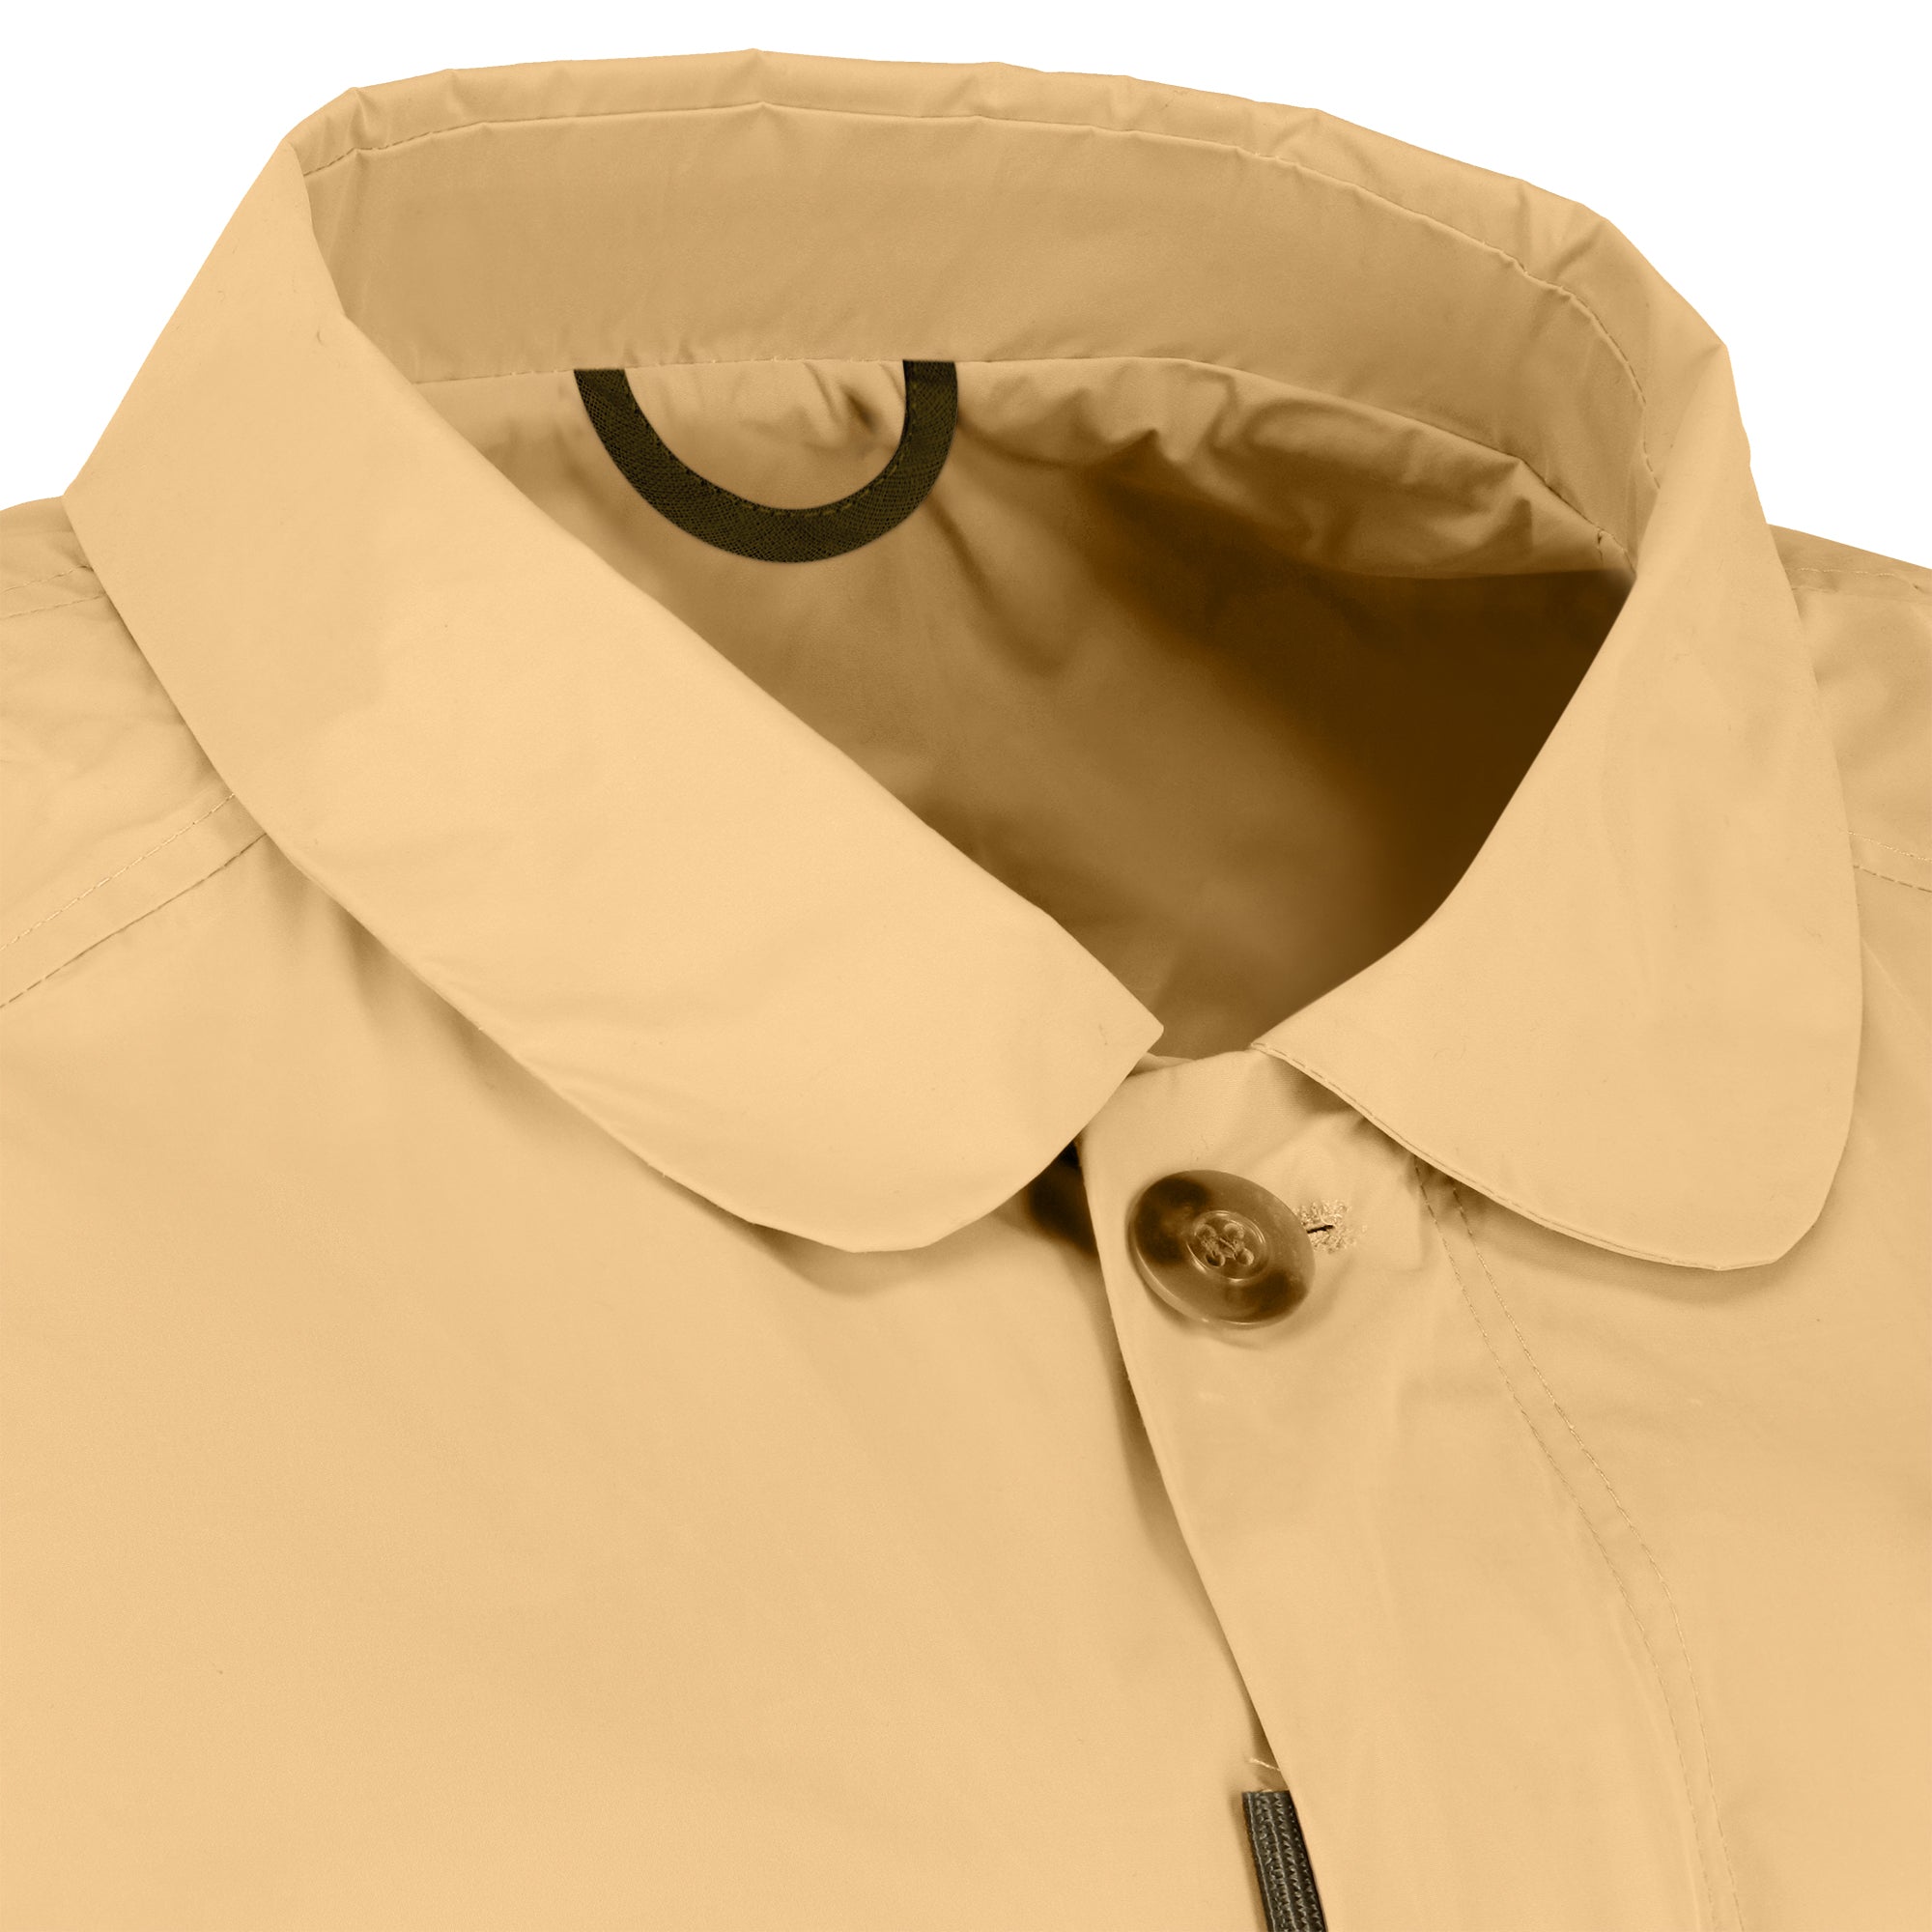 Strato men's raincoat - panama color - neckline detail